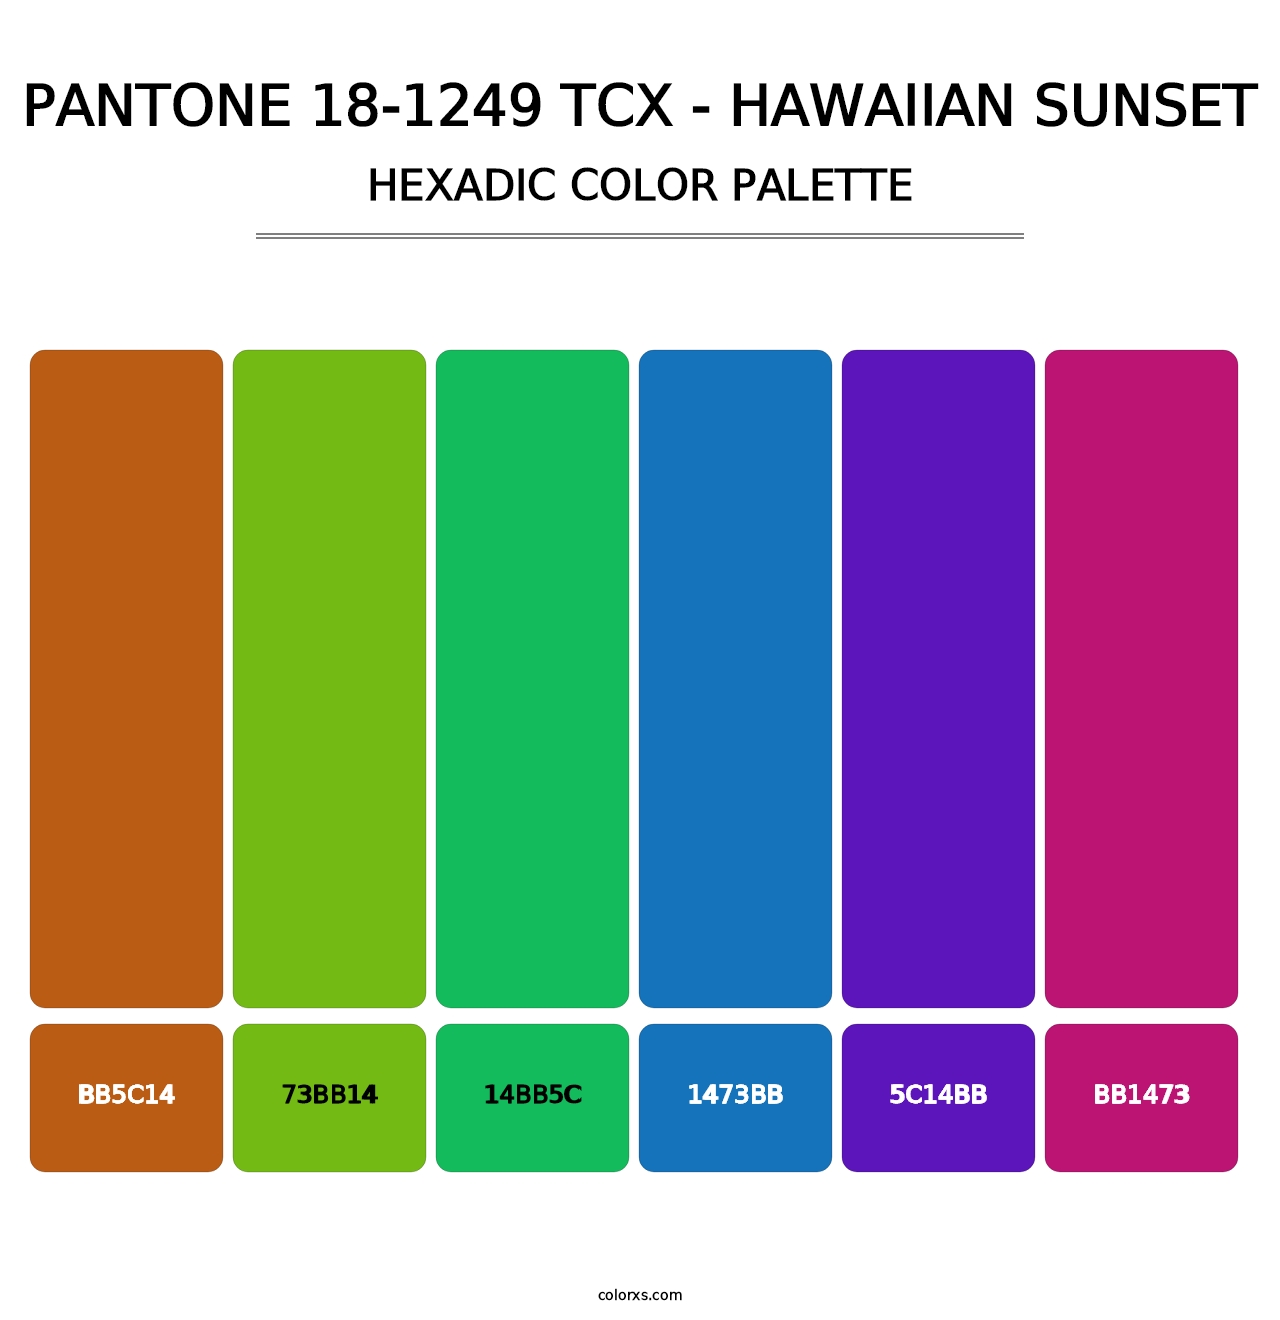 PANTONE 18-1249 TCX - Hawaiian Sunset - Hexadic Color Palette